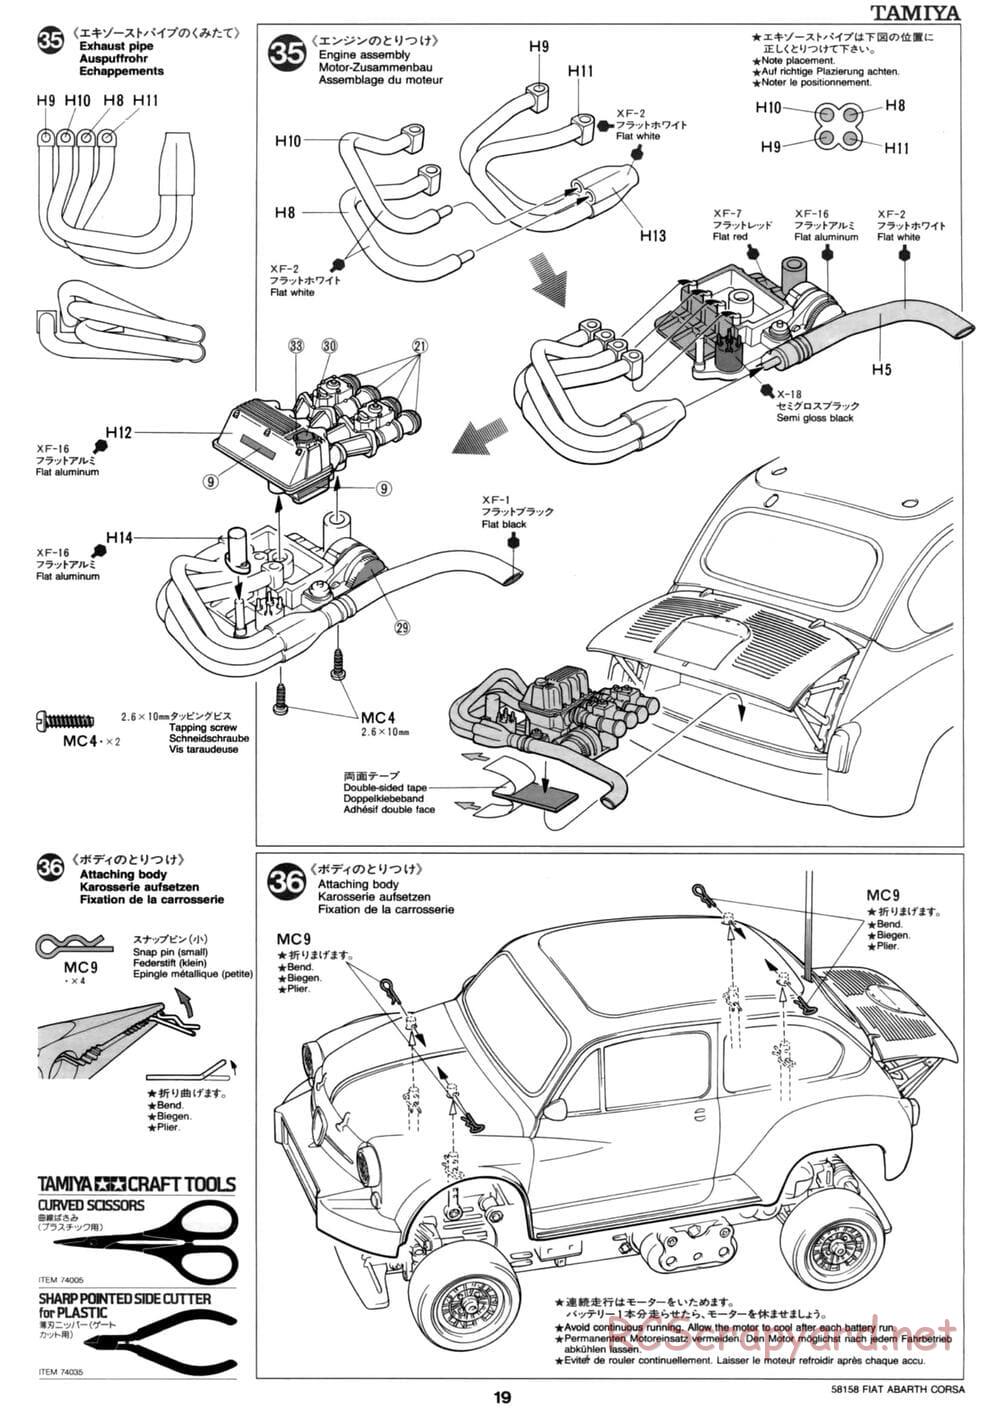 Tamiya - Fiat Abarth 1000 TCR Berlina Corse - M02 Chassis - Manual - Page 19